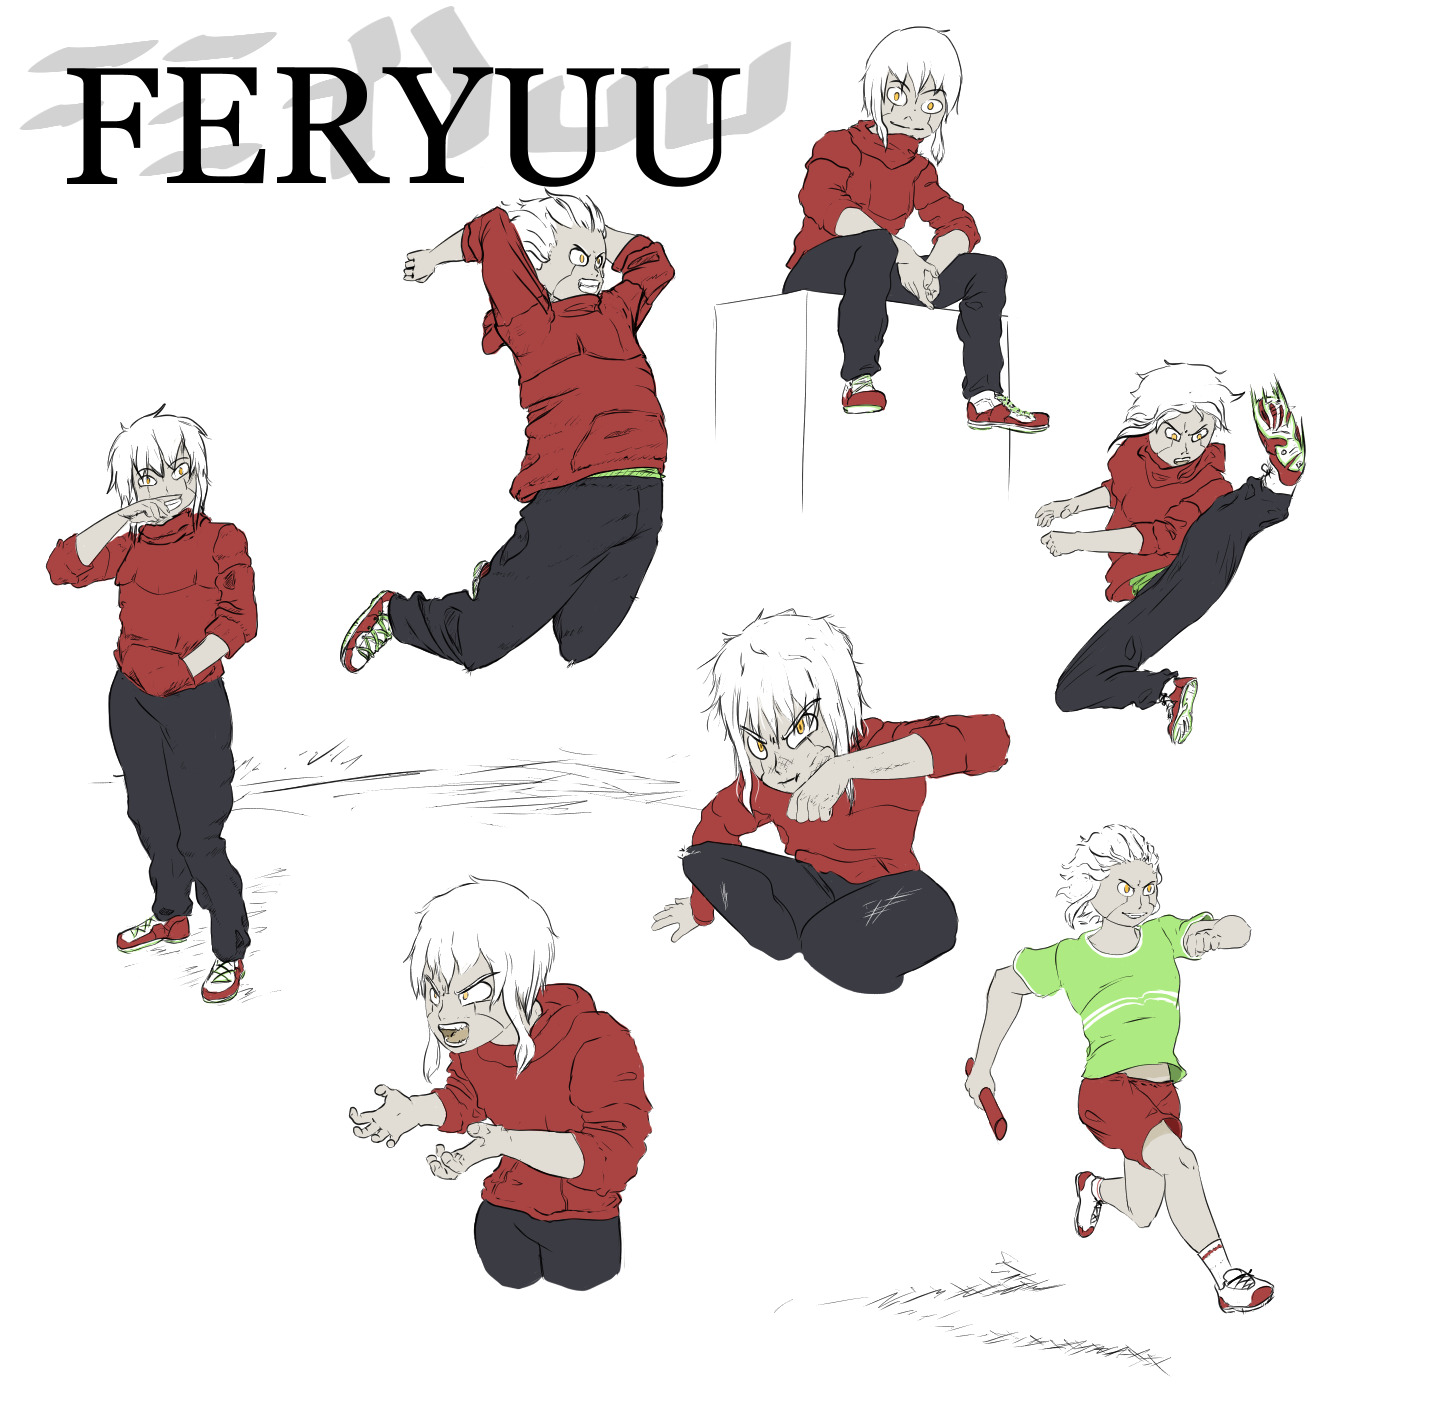 Feryuu in several poses